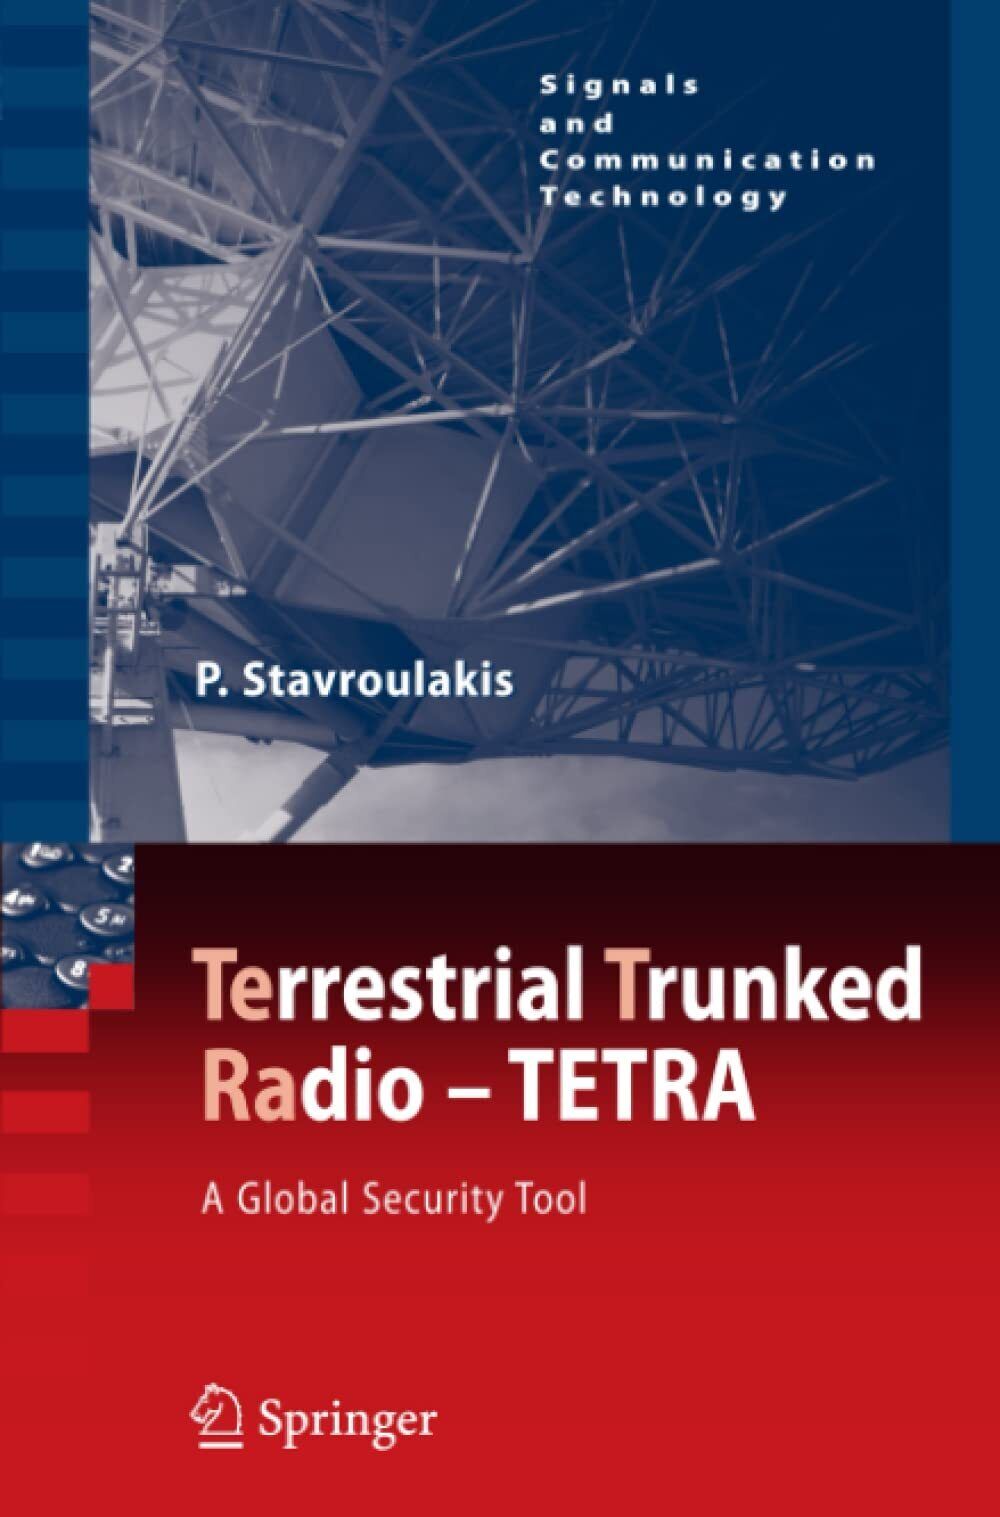 TErrestrial Trunked RAdio - TETRA - Peter Stavroulakis - Springer, 2010 libro usato